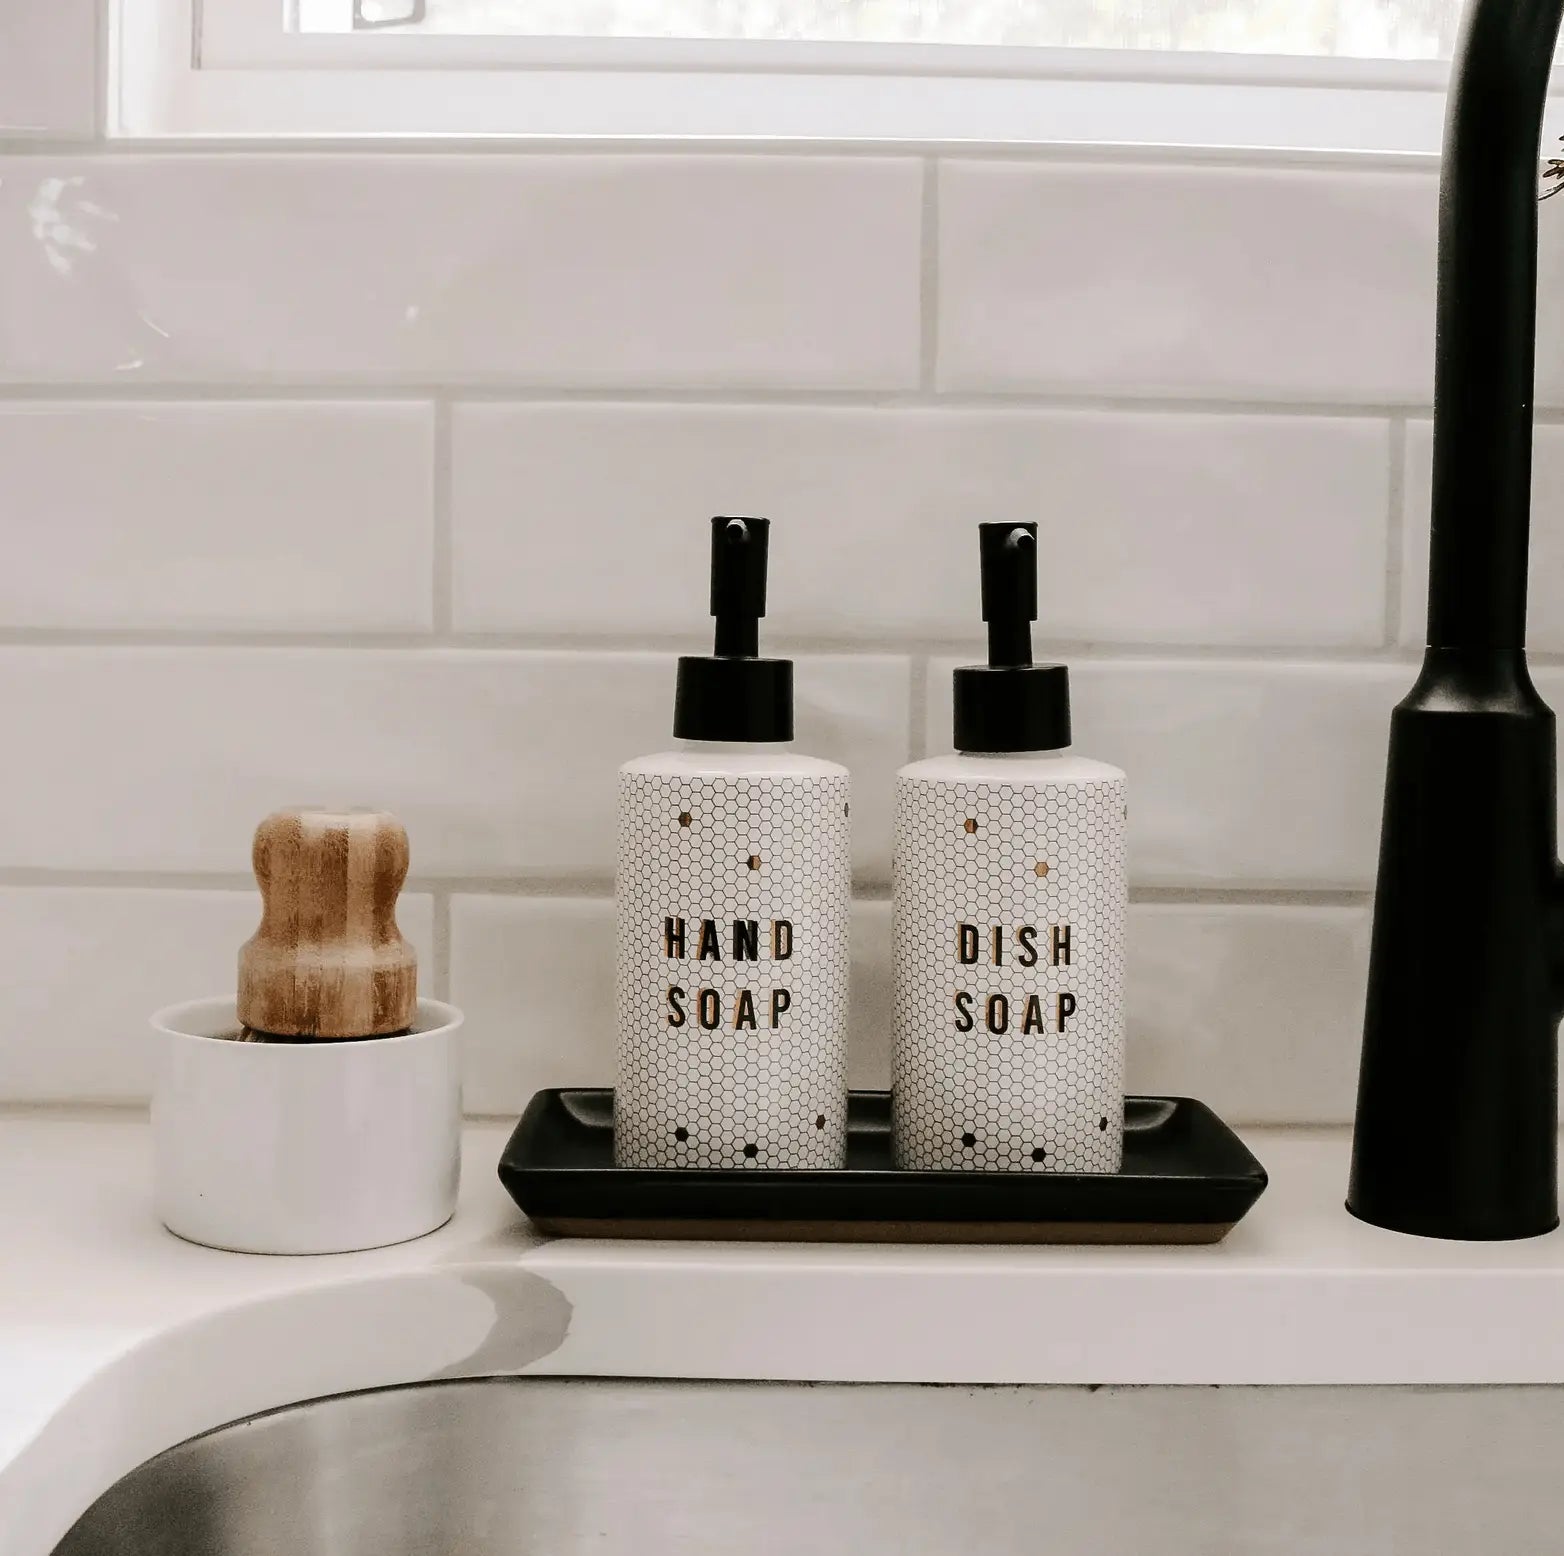 Honeycomb Tile Hand & Dish Soap Dispensers - White, Gold, Black